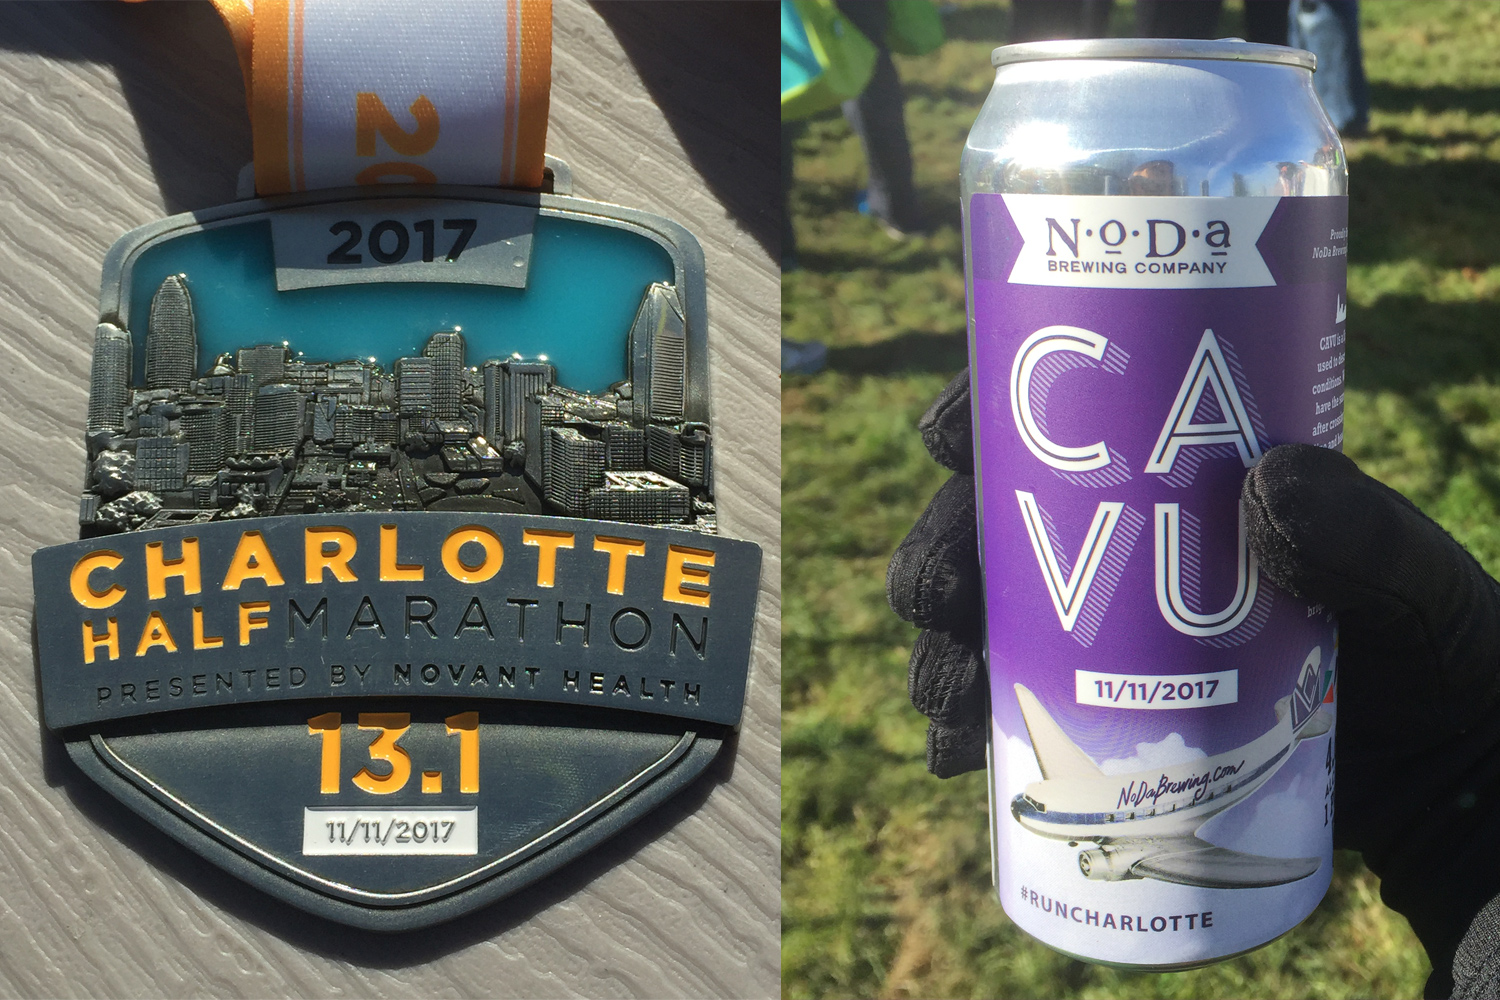 2017 Charlotte half marathon medal and special edition of NoDA Brewing's CAVU beer